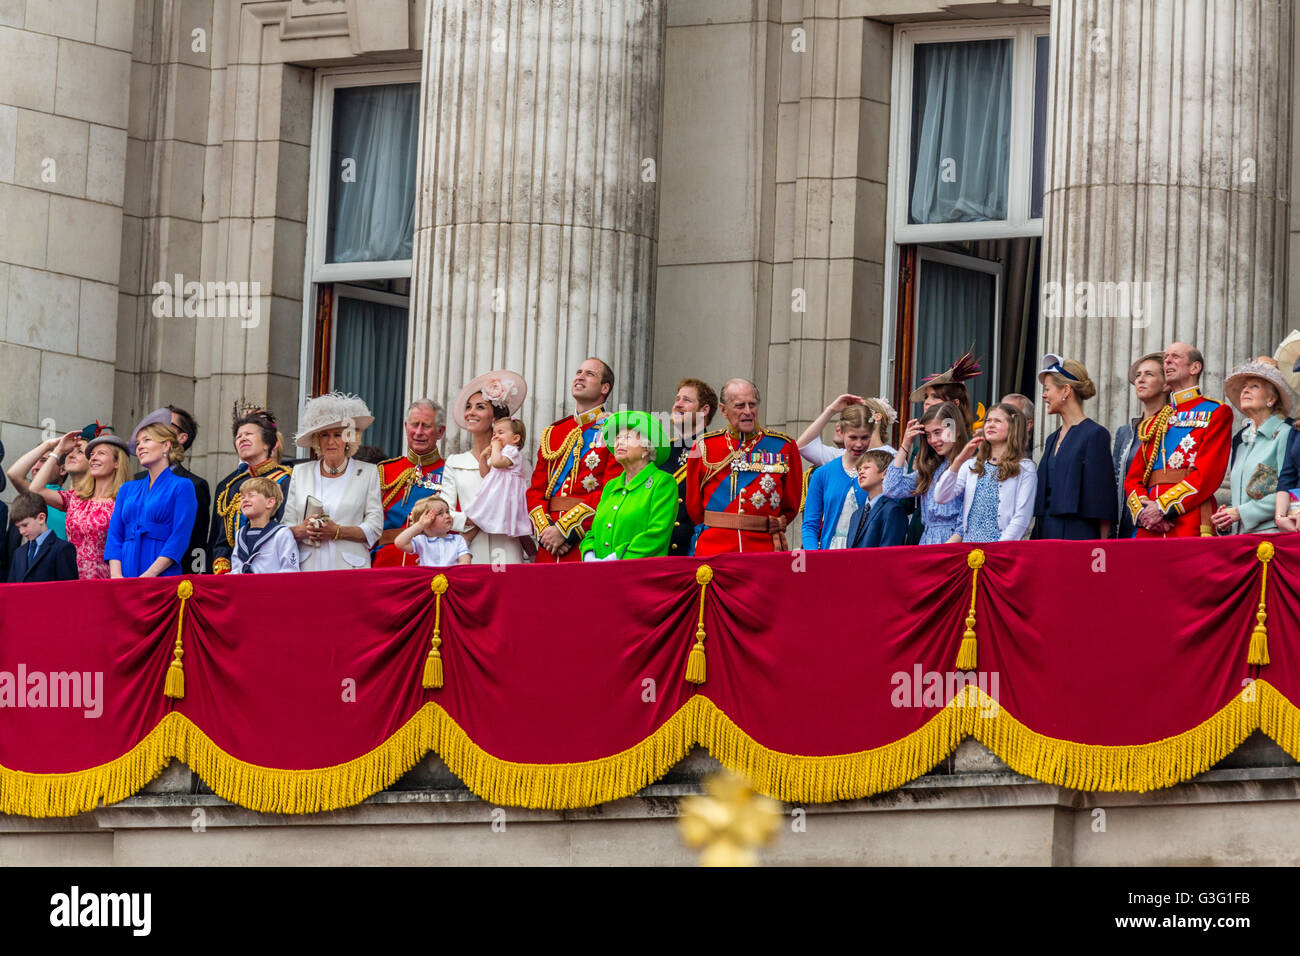 The Royal Family Celebrating the Queens Birthday on the balcony of Buckingham Palace London UK 2017 Stock Photo